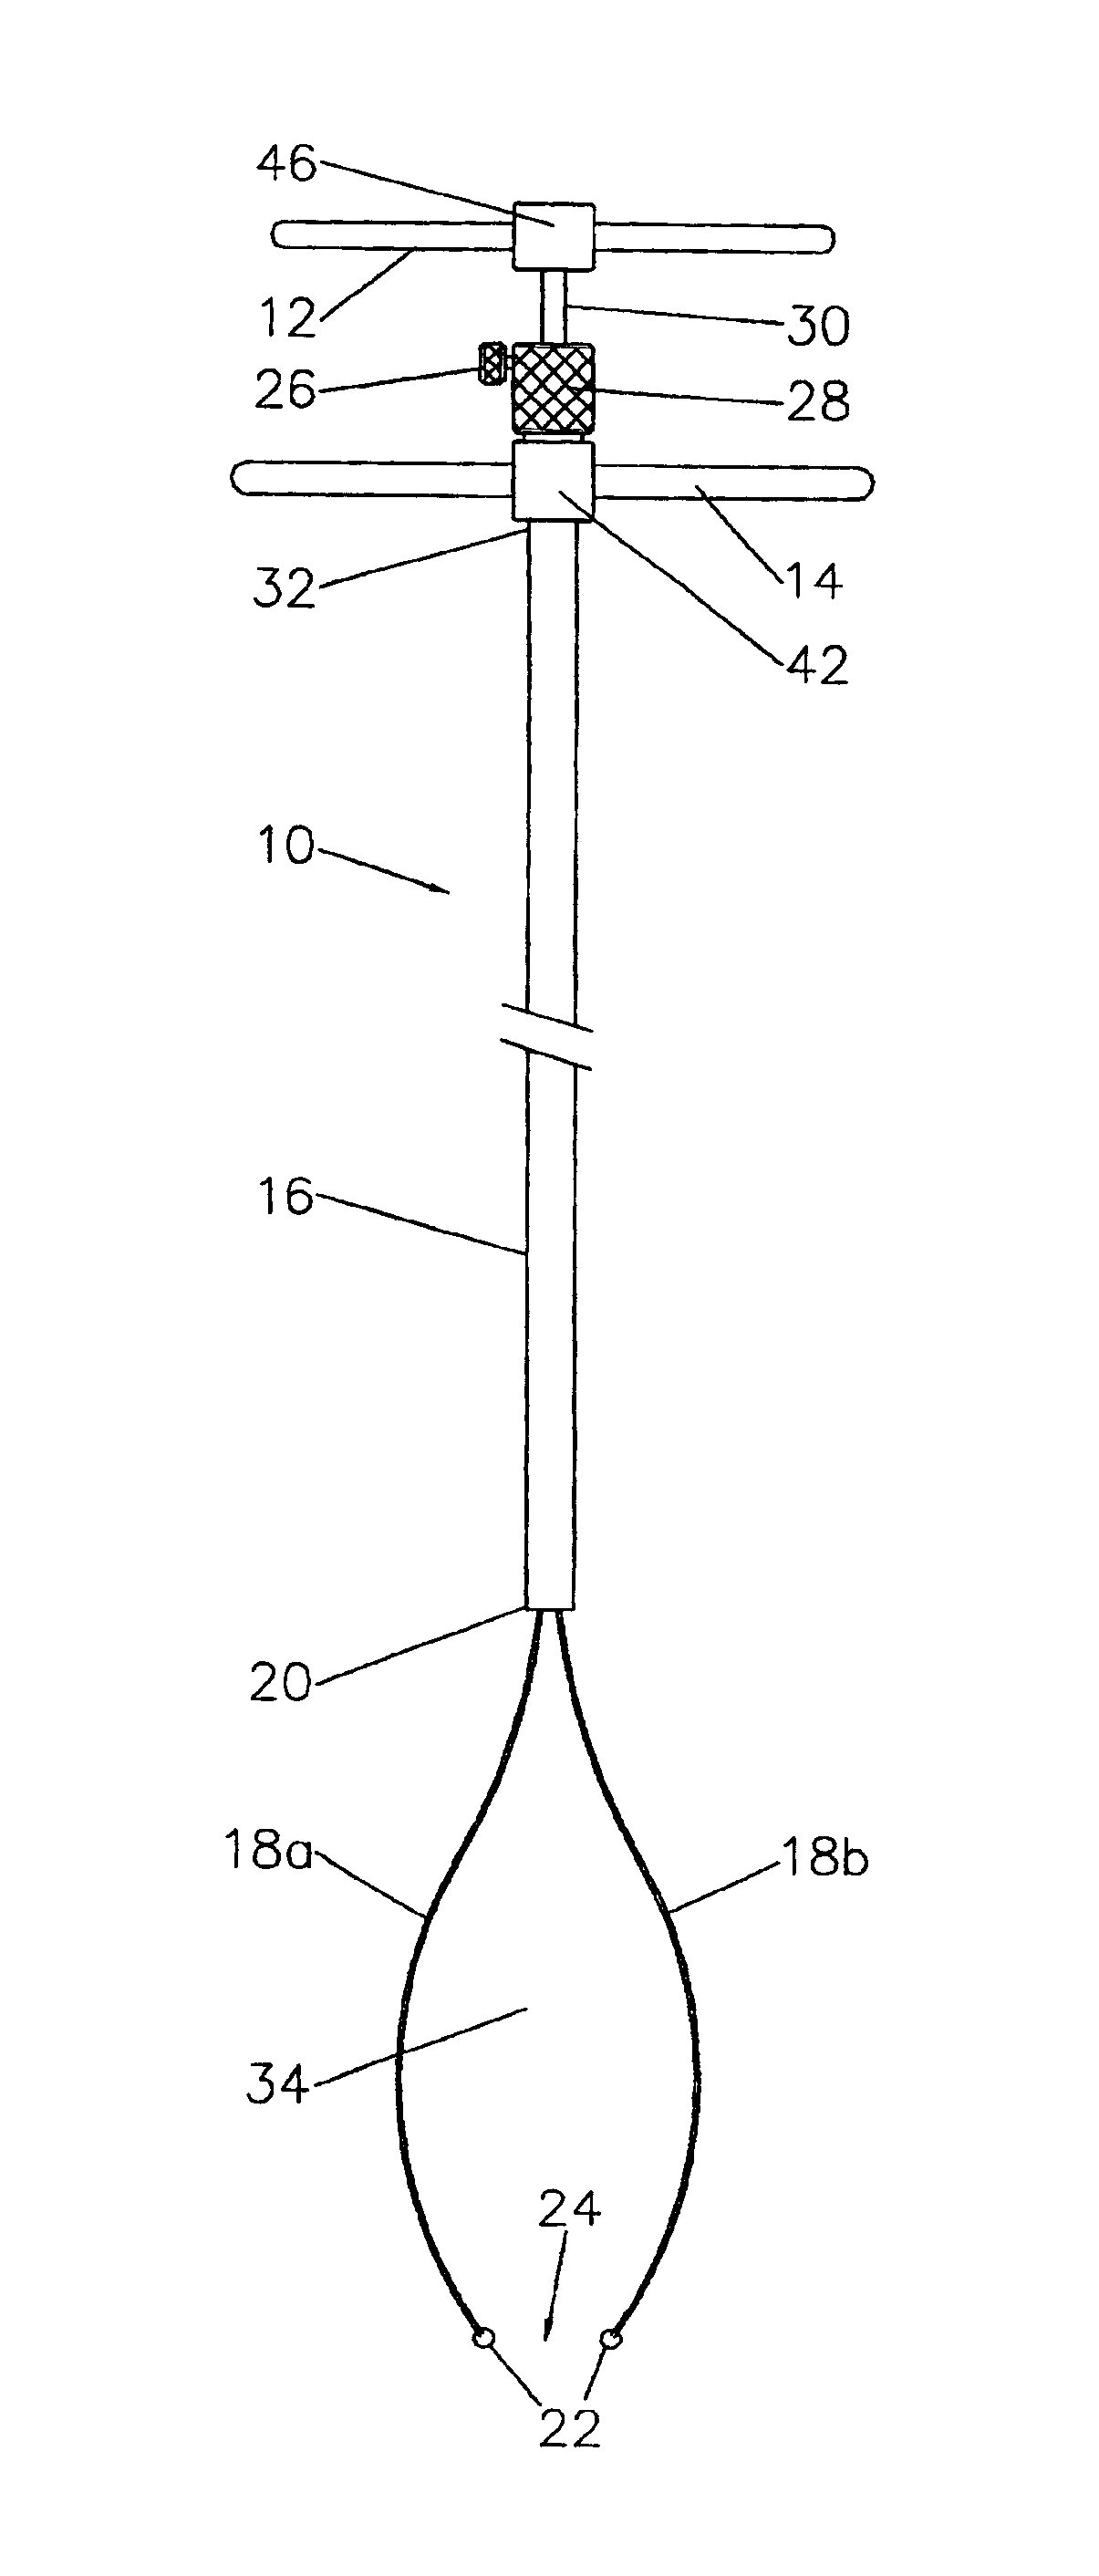 Laparoscopic lifter apparatus and method